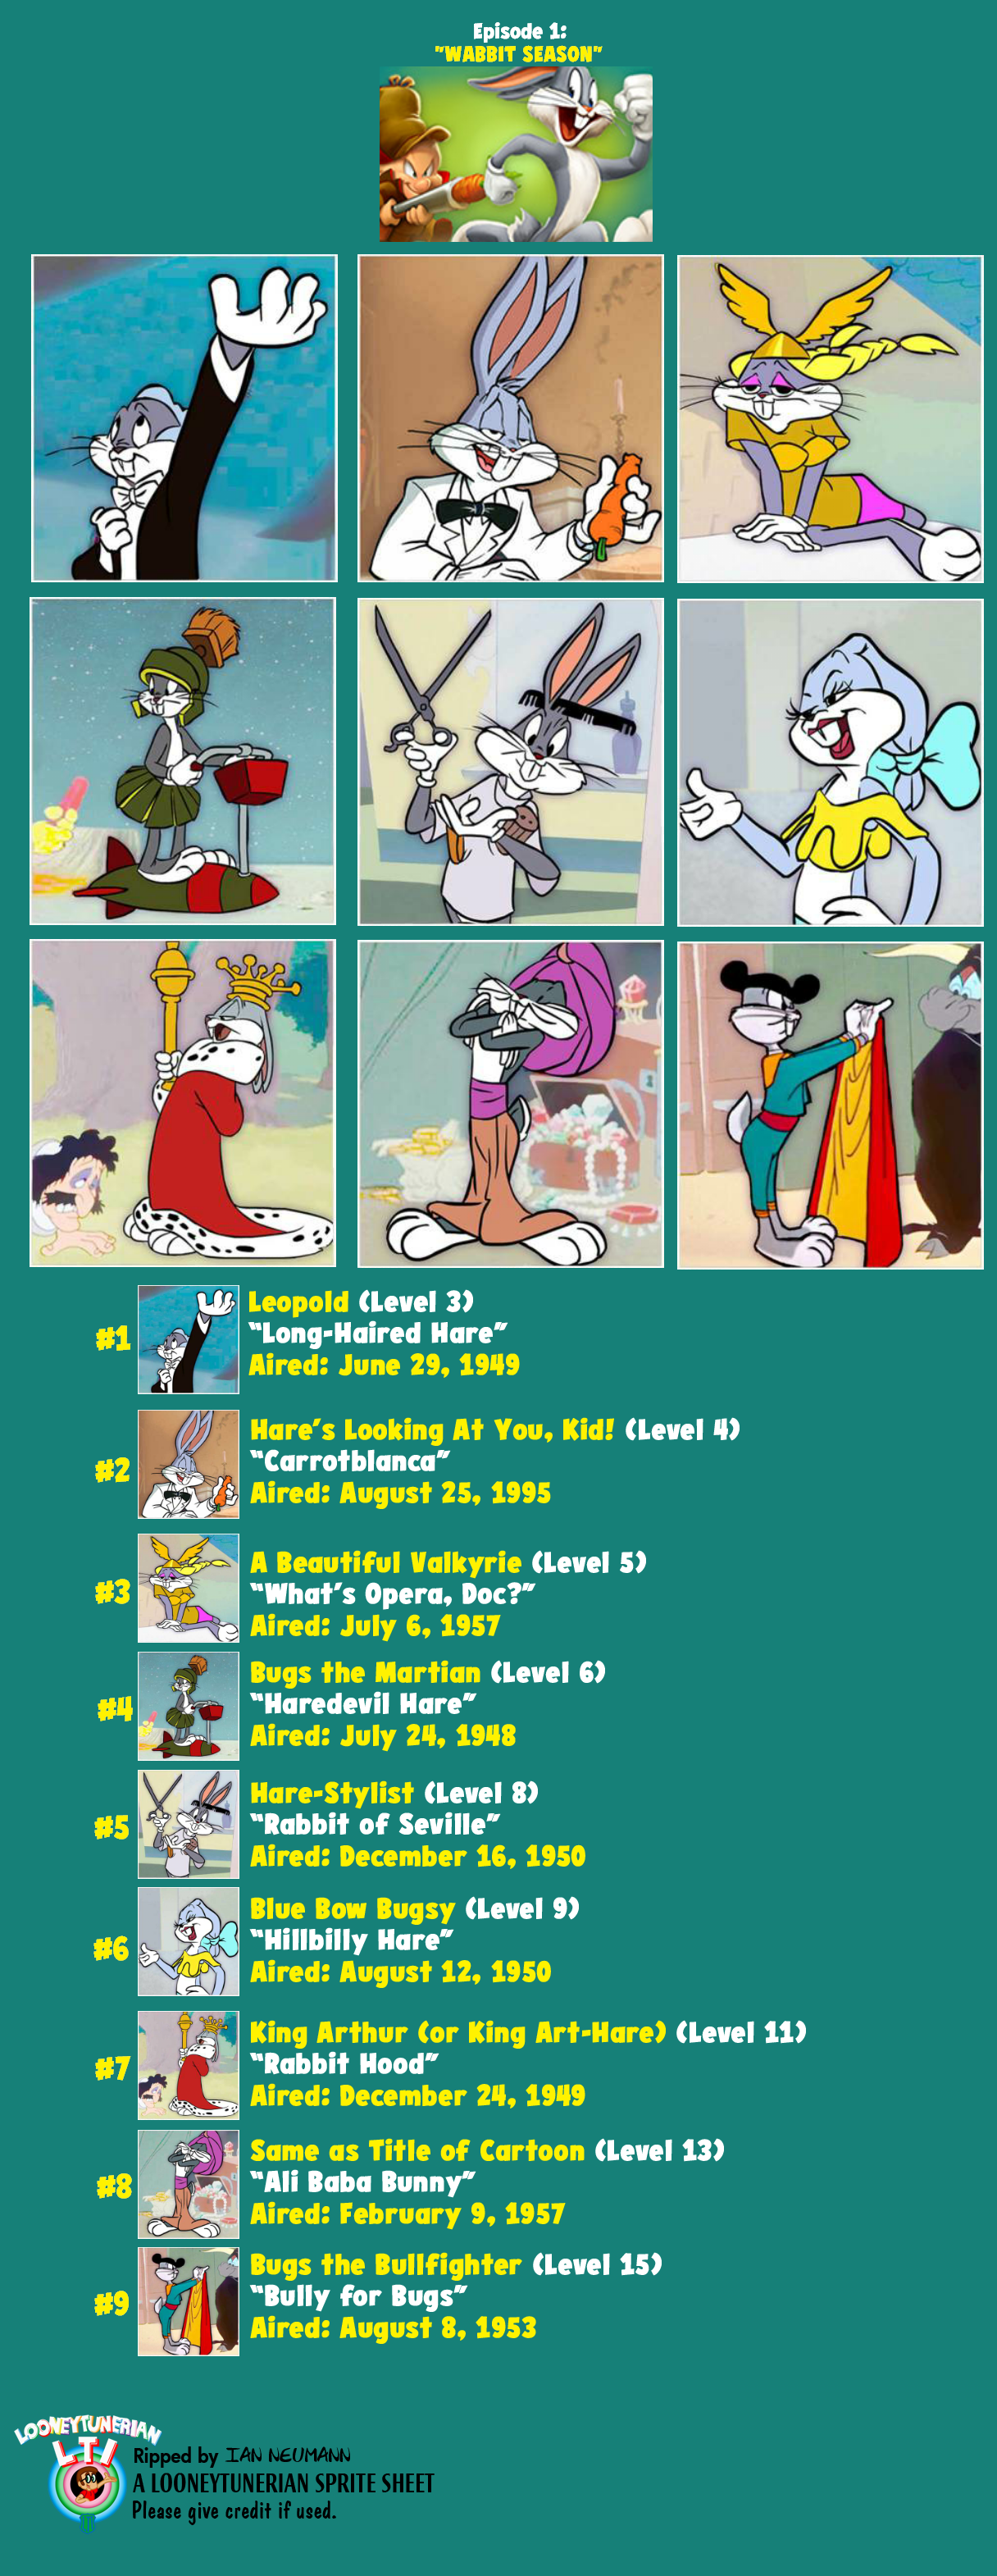 Looney Tunes Dash! - Episode 01: "Wabbit Season"